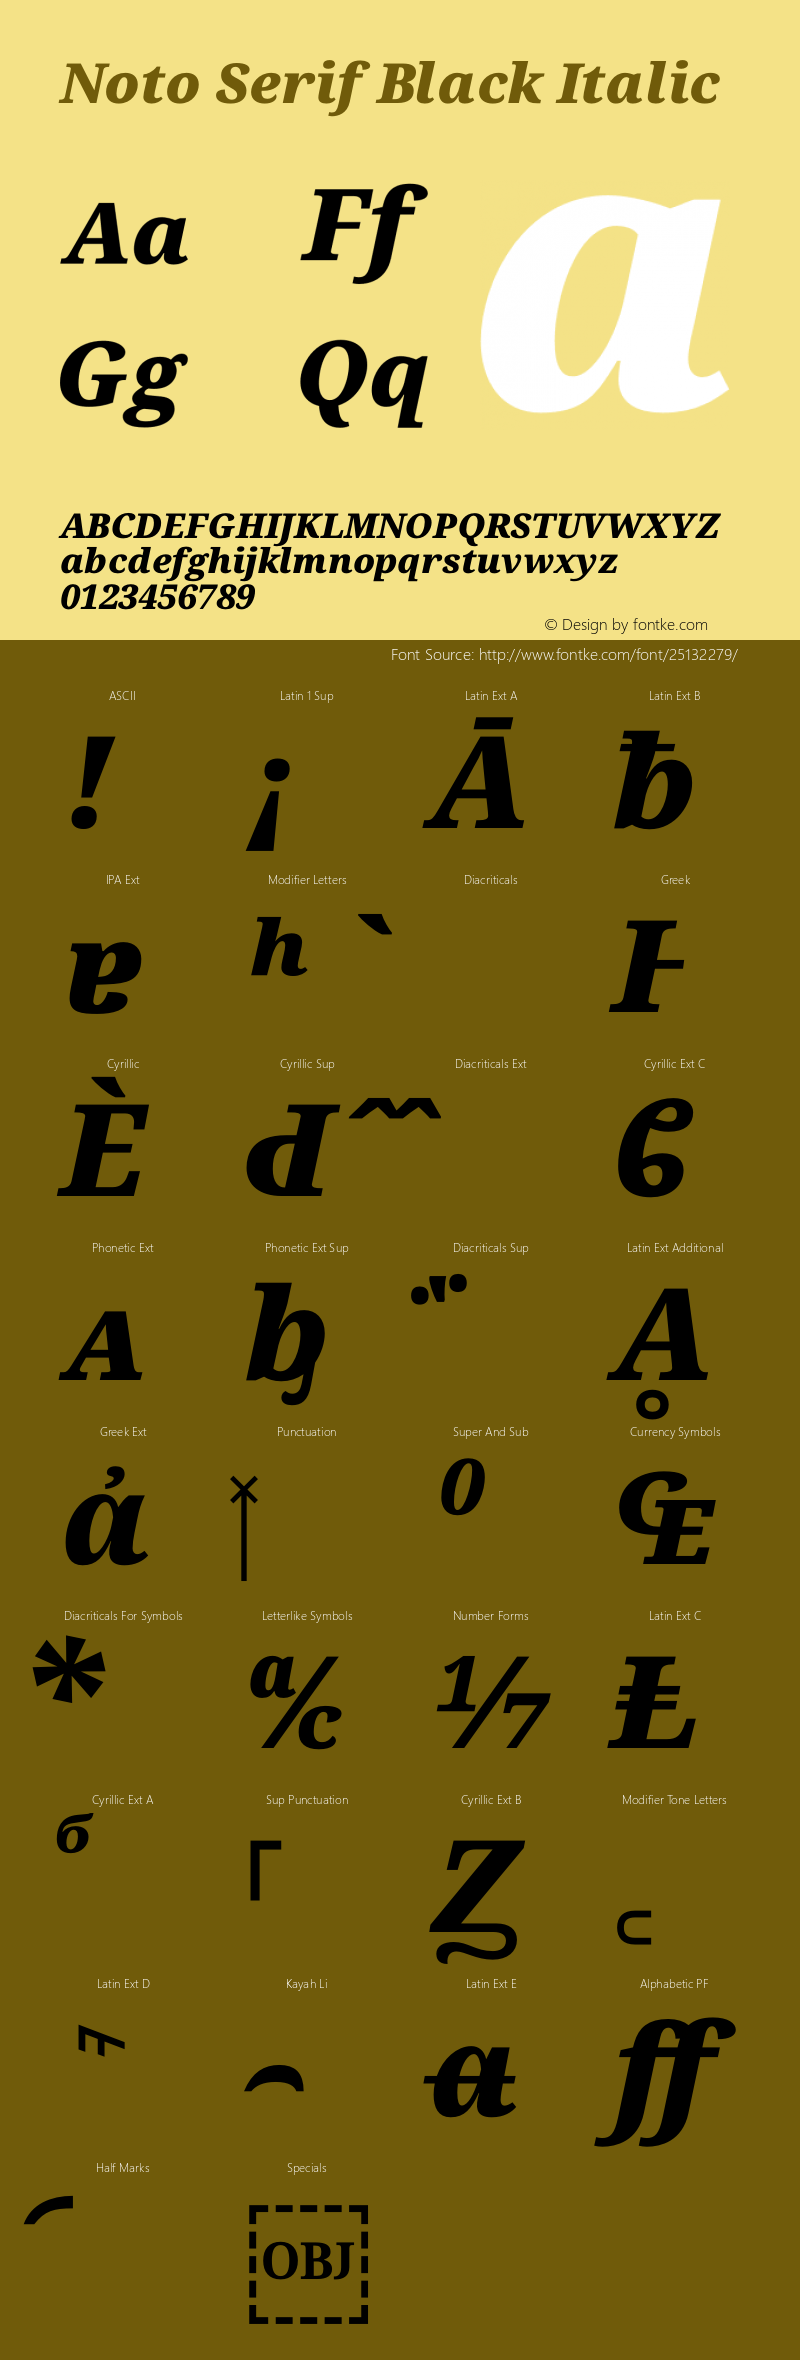 Noto Serif Black Italic Version 2.000 Font Sample